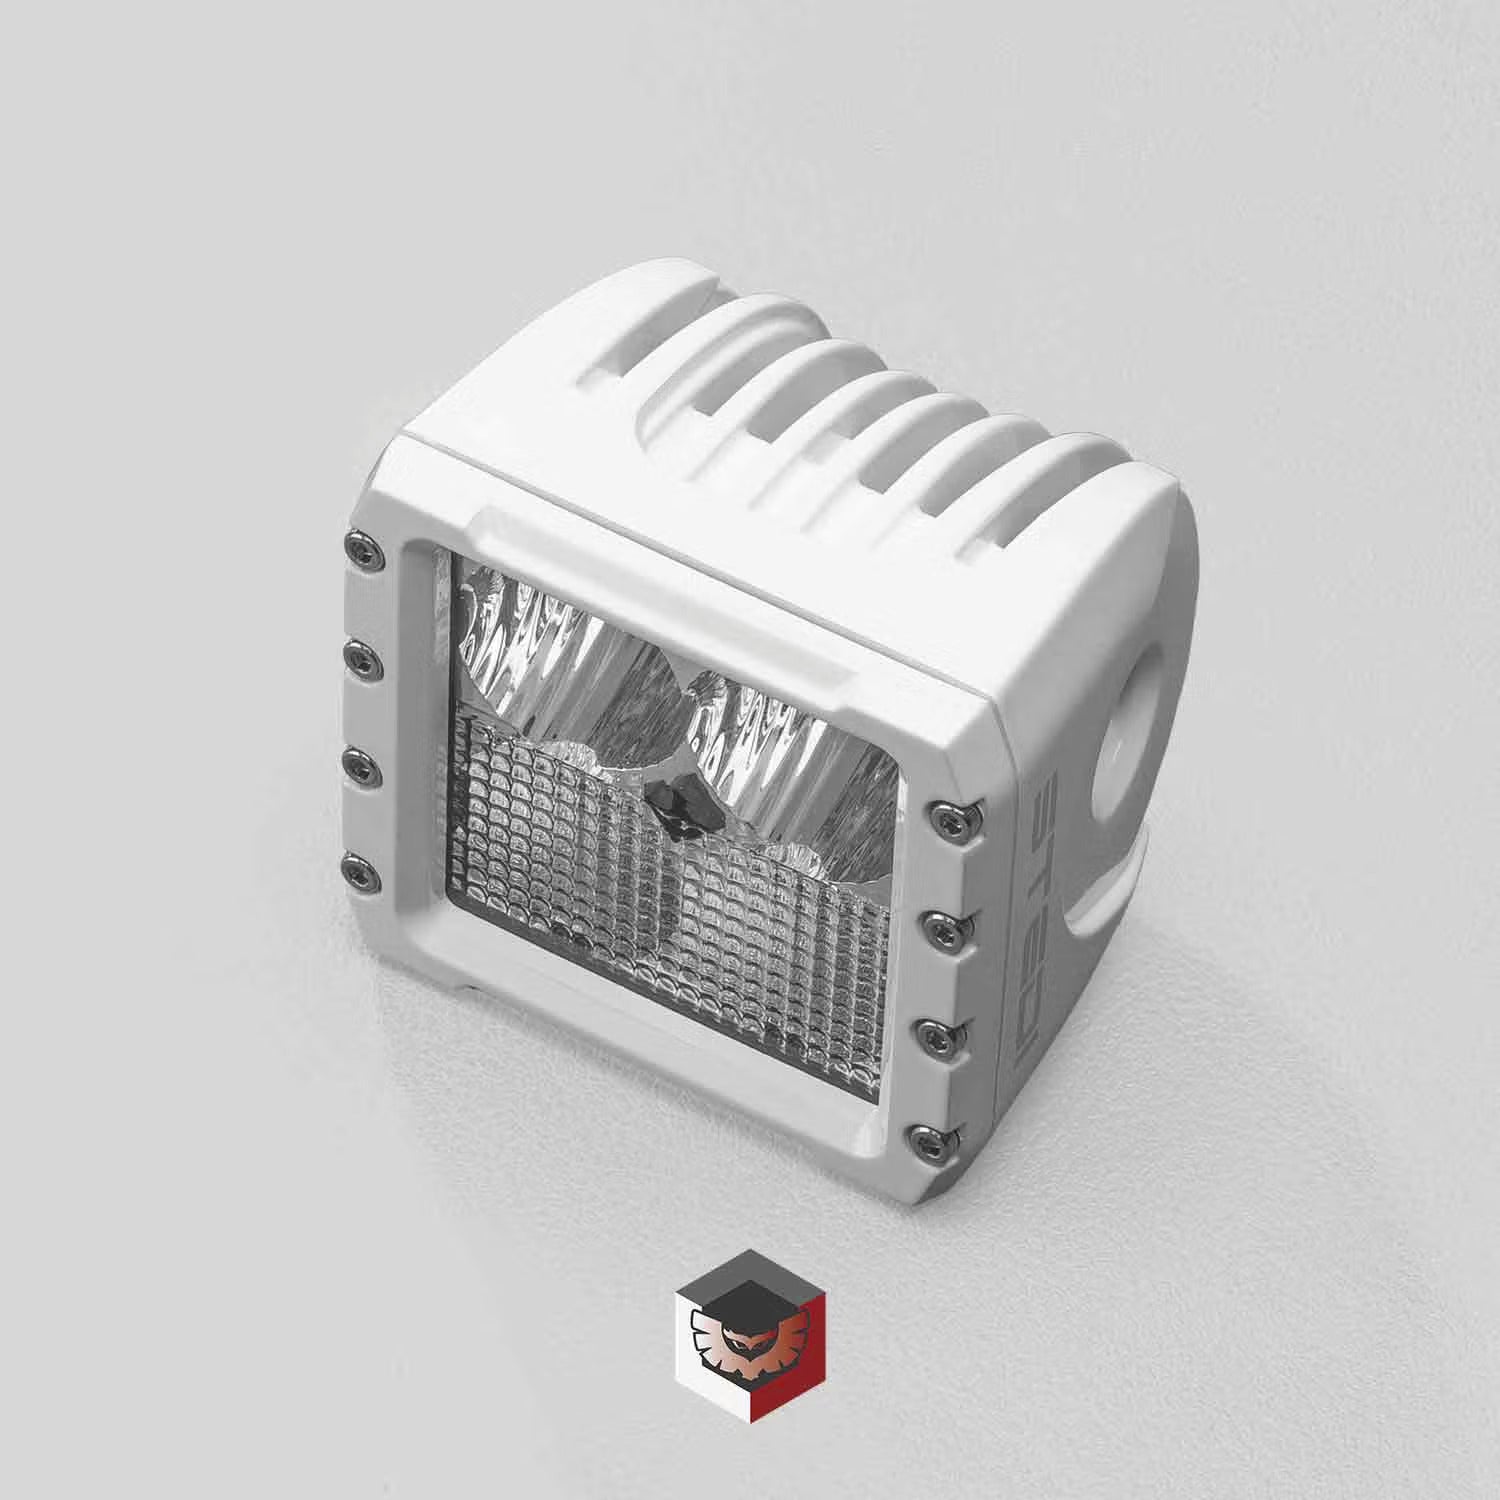 STEDI Marine C4 White Edition LED Light Cube (Rot/Weiß Dual Linse)